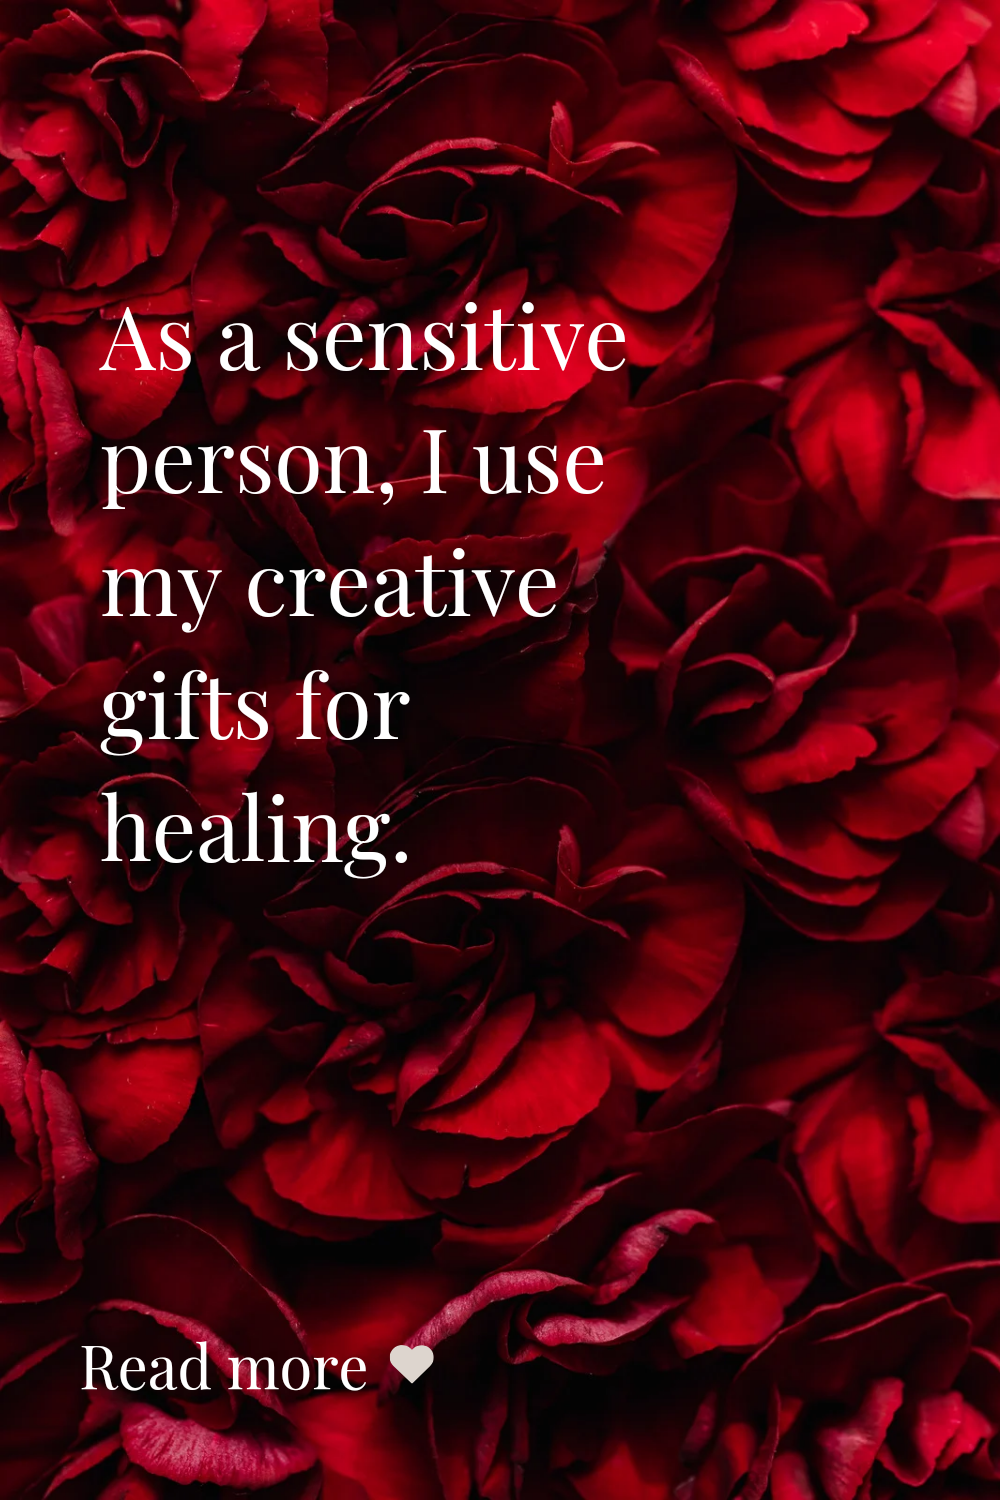 As a sensitive person I use creativity for self care